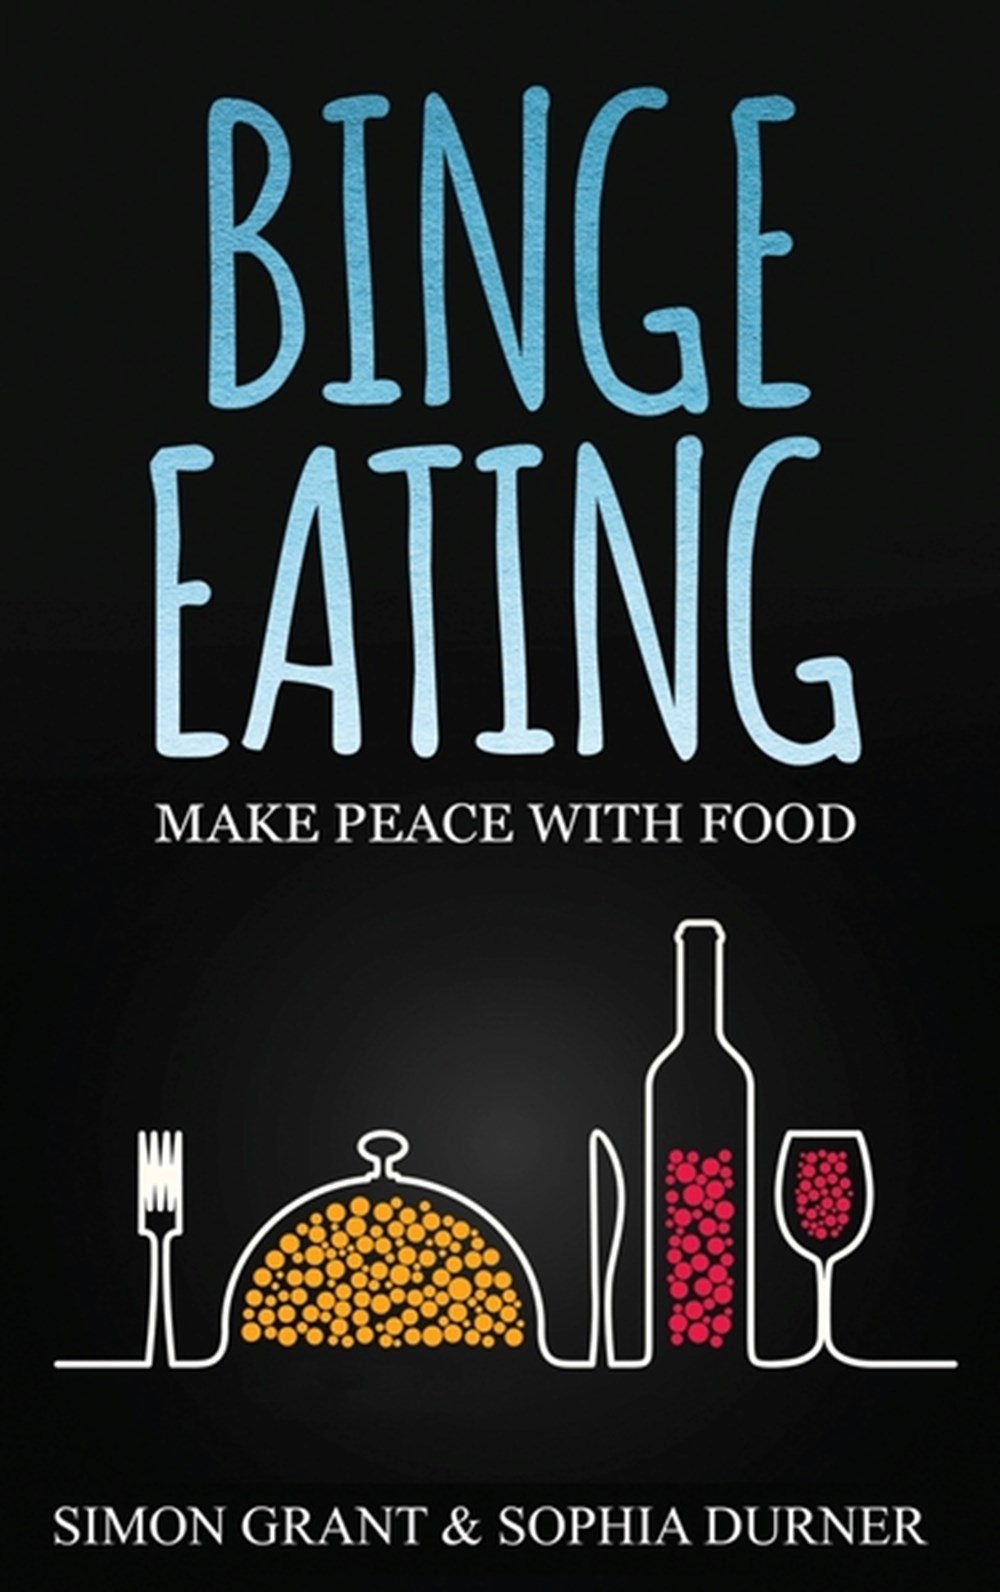 Binge Eating: Make Peace with Food